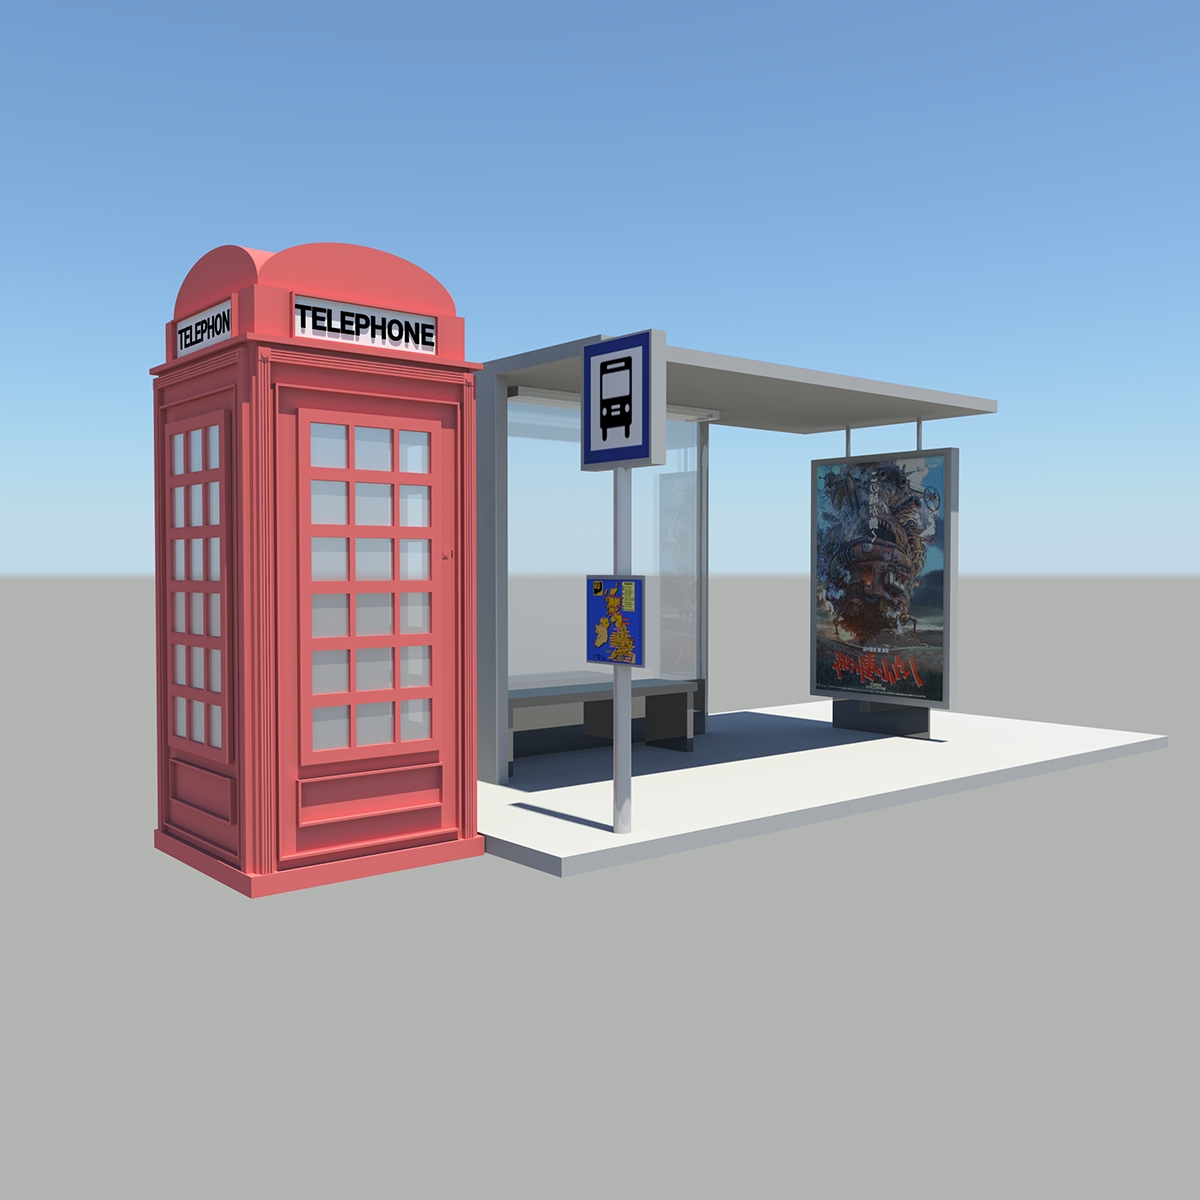 London telephone bus stop